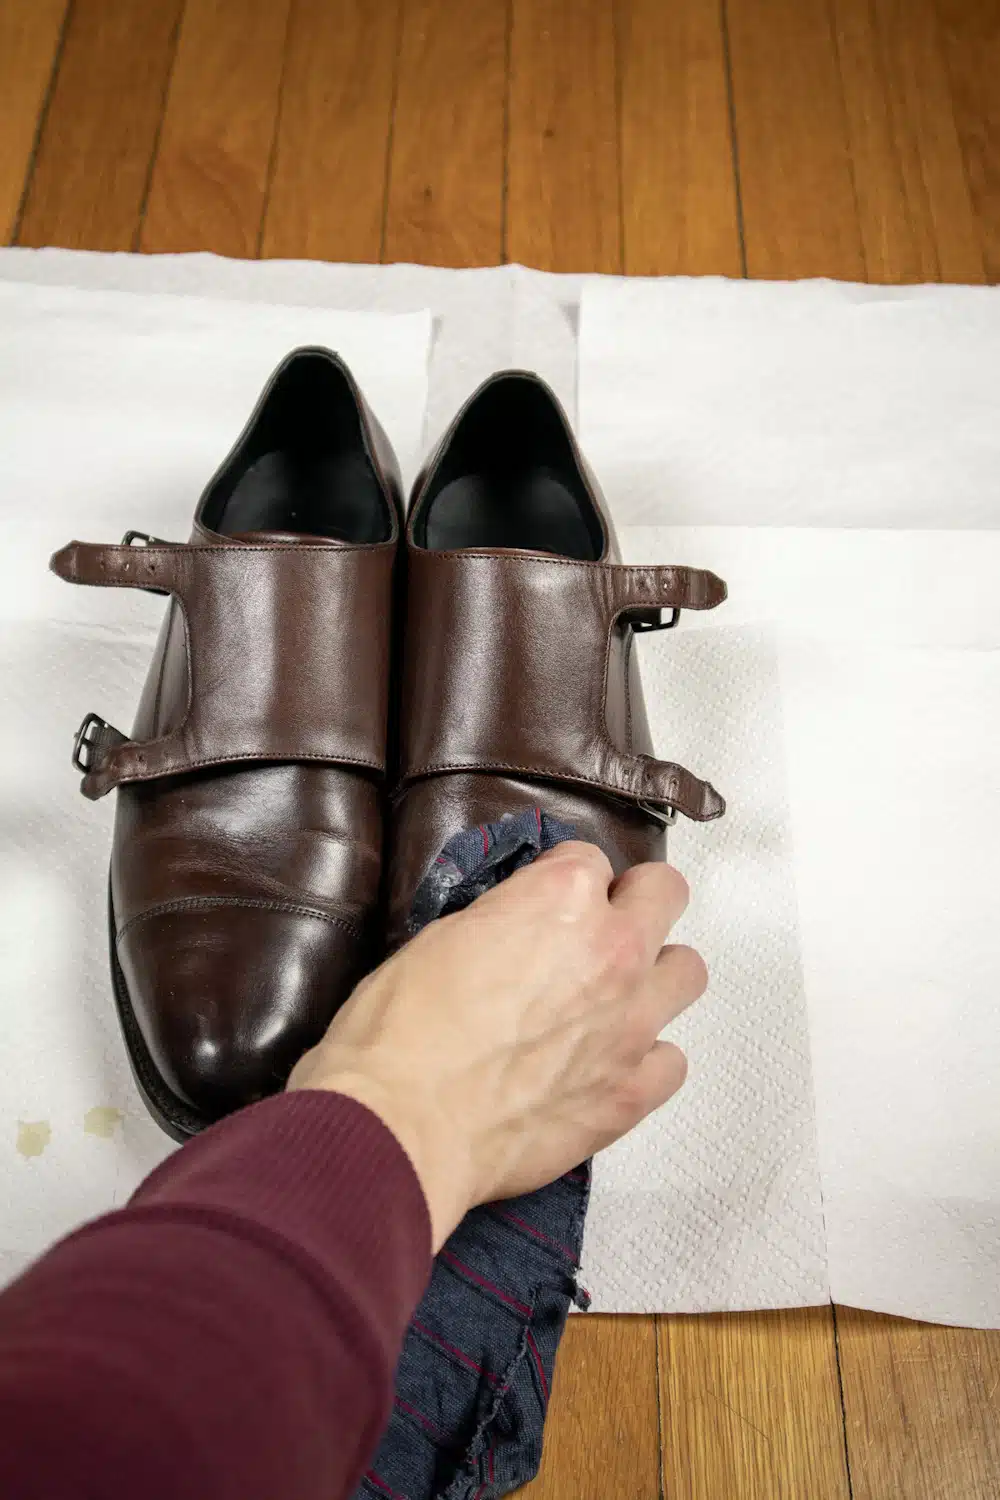 Applying Wax on Dress Shoes